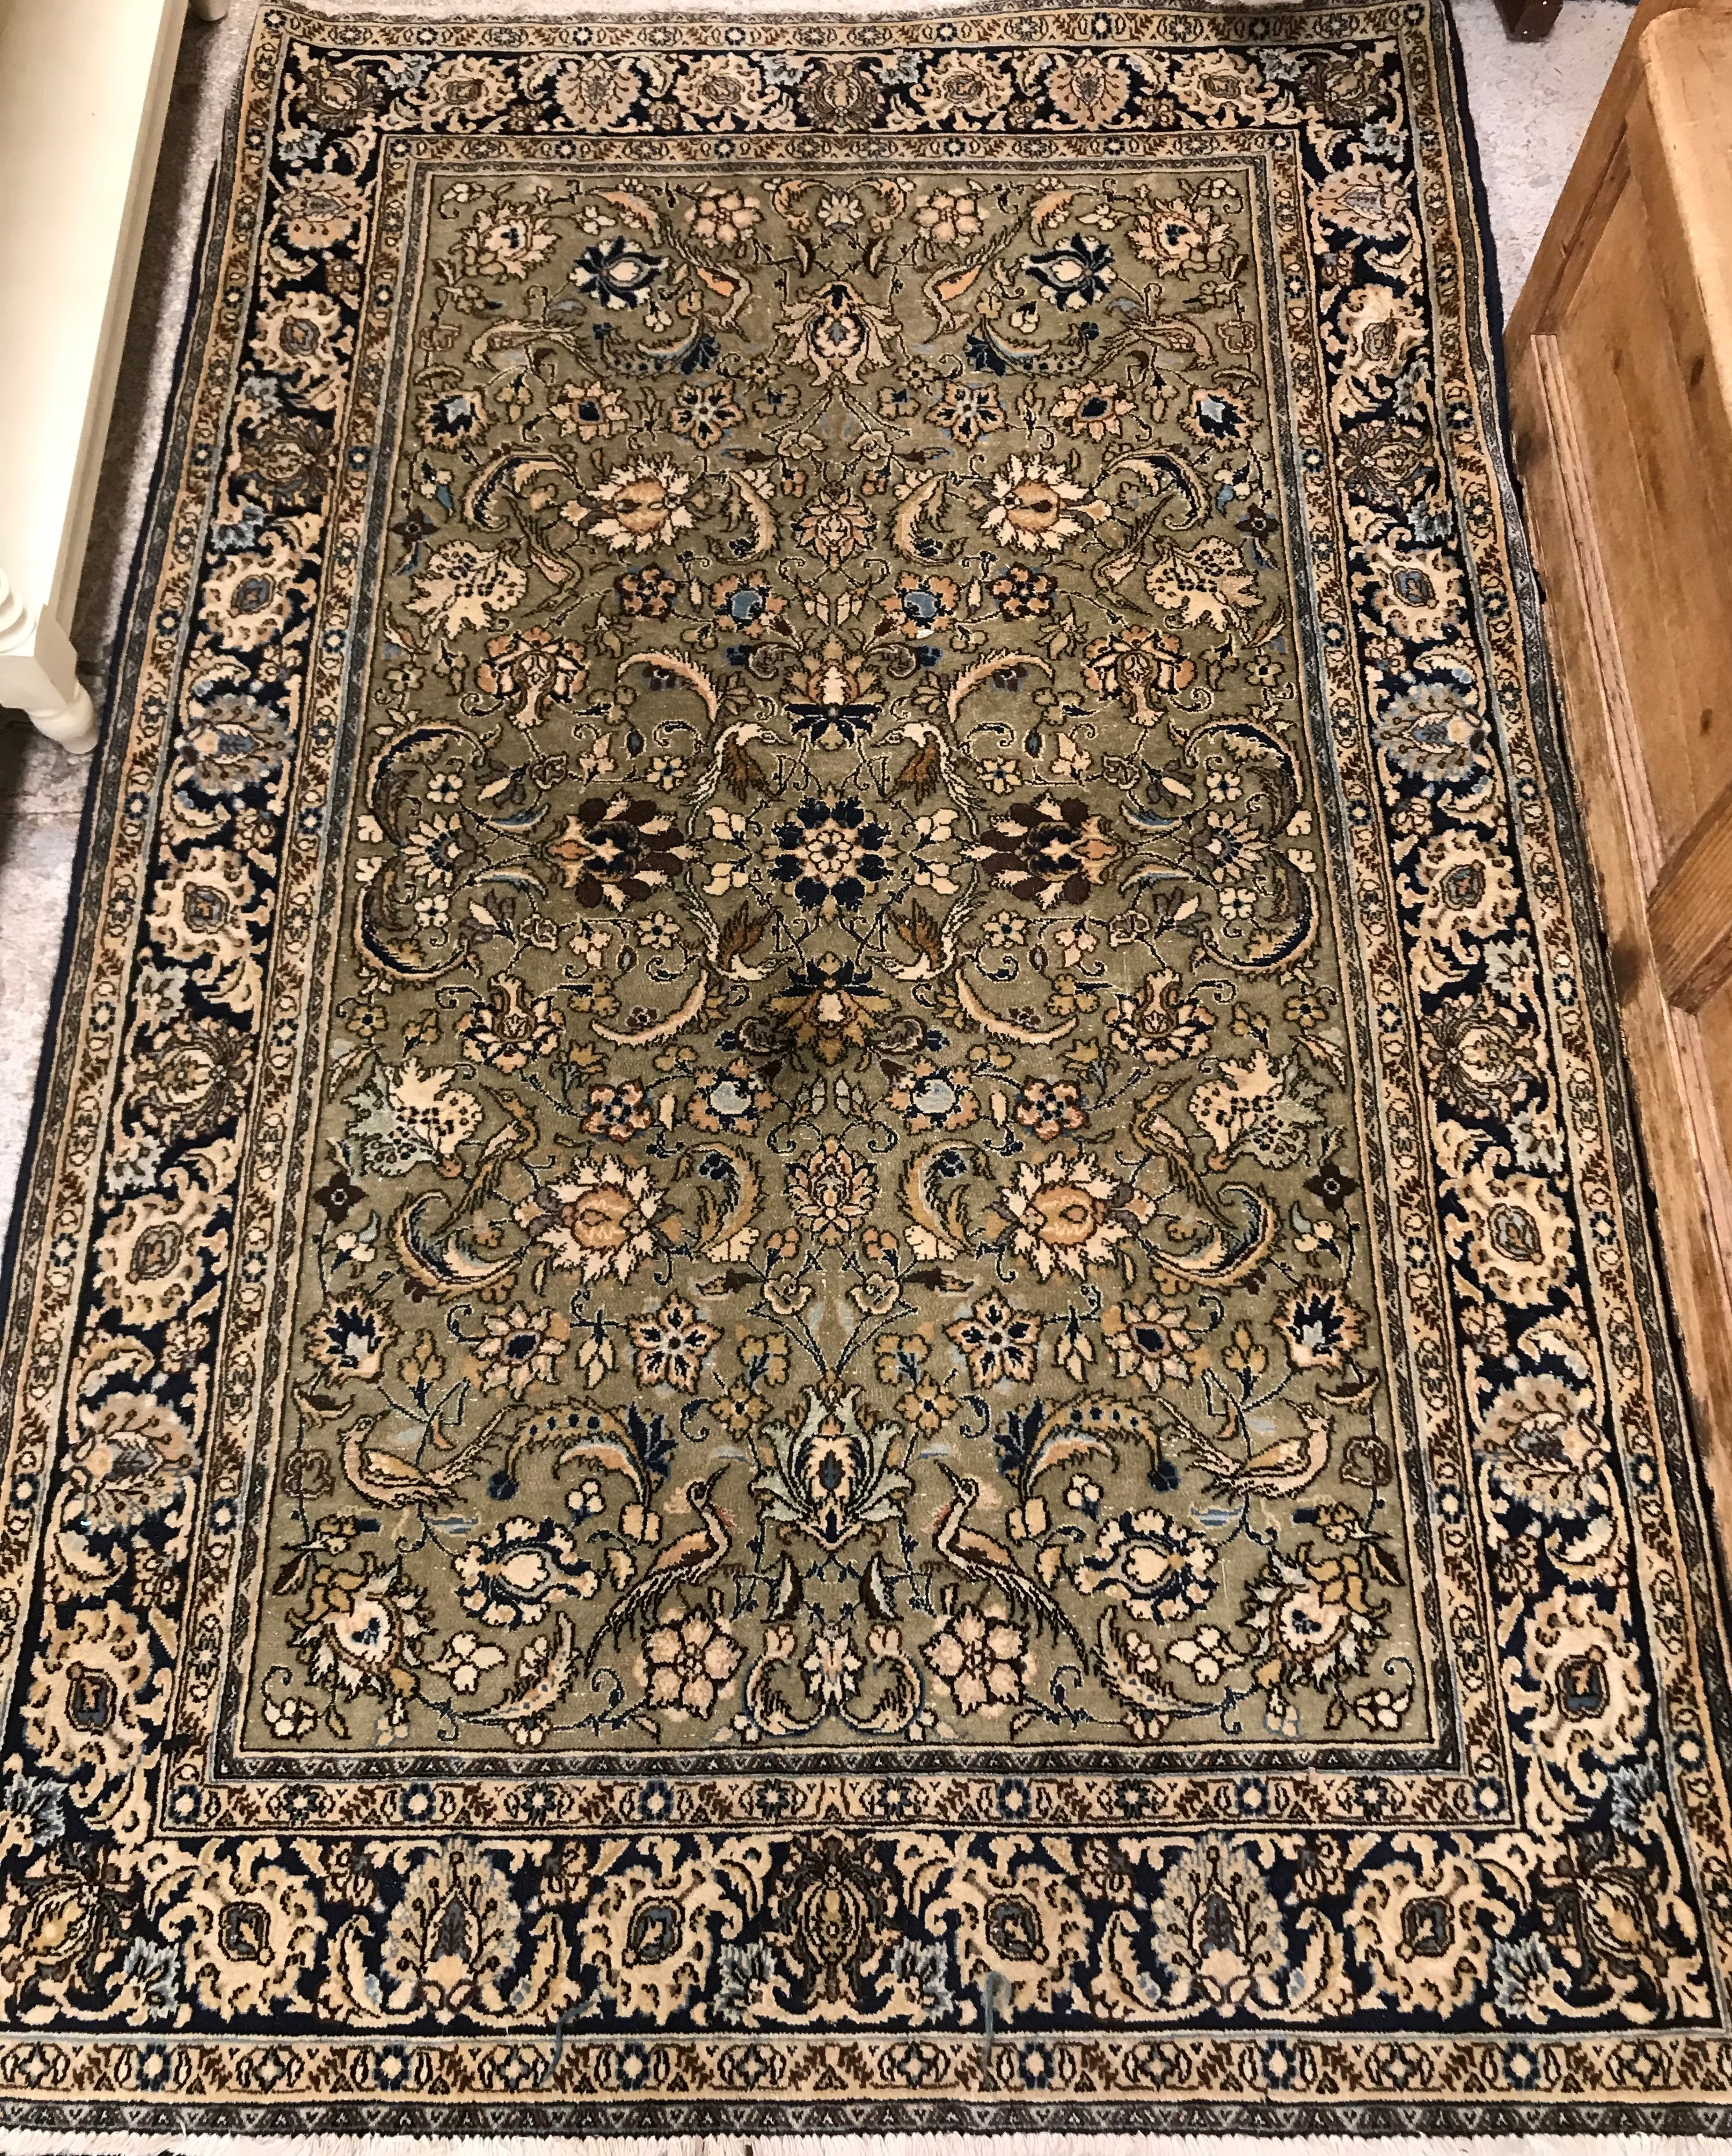 A vintage Caucasian rug,